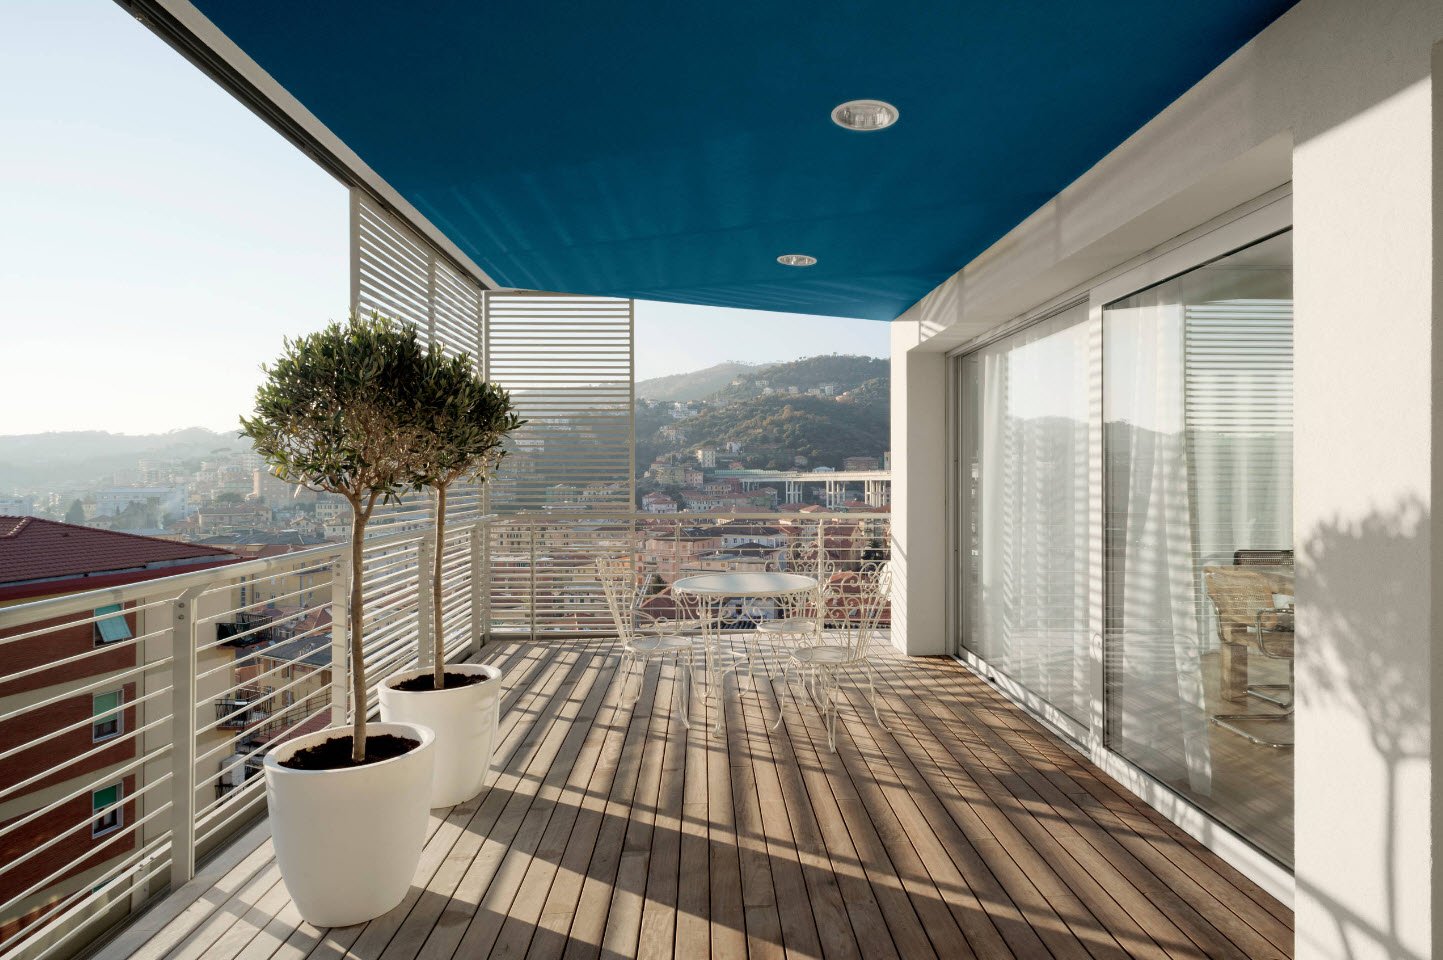 Balcony Designs For Indian Homes - Home Interior Ideas